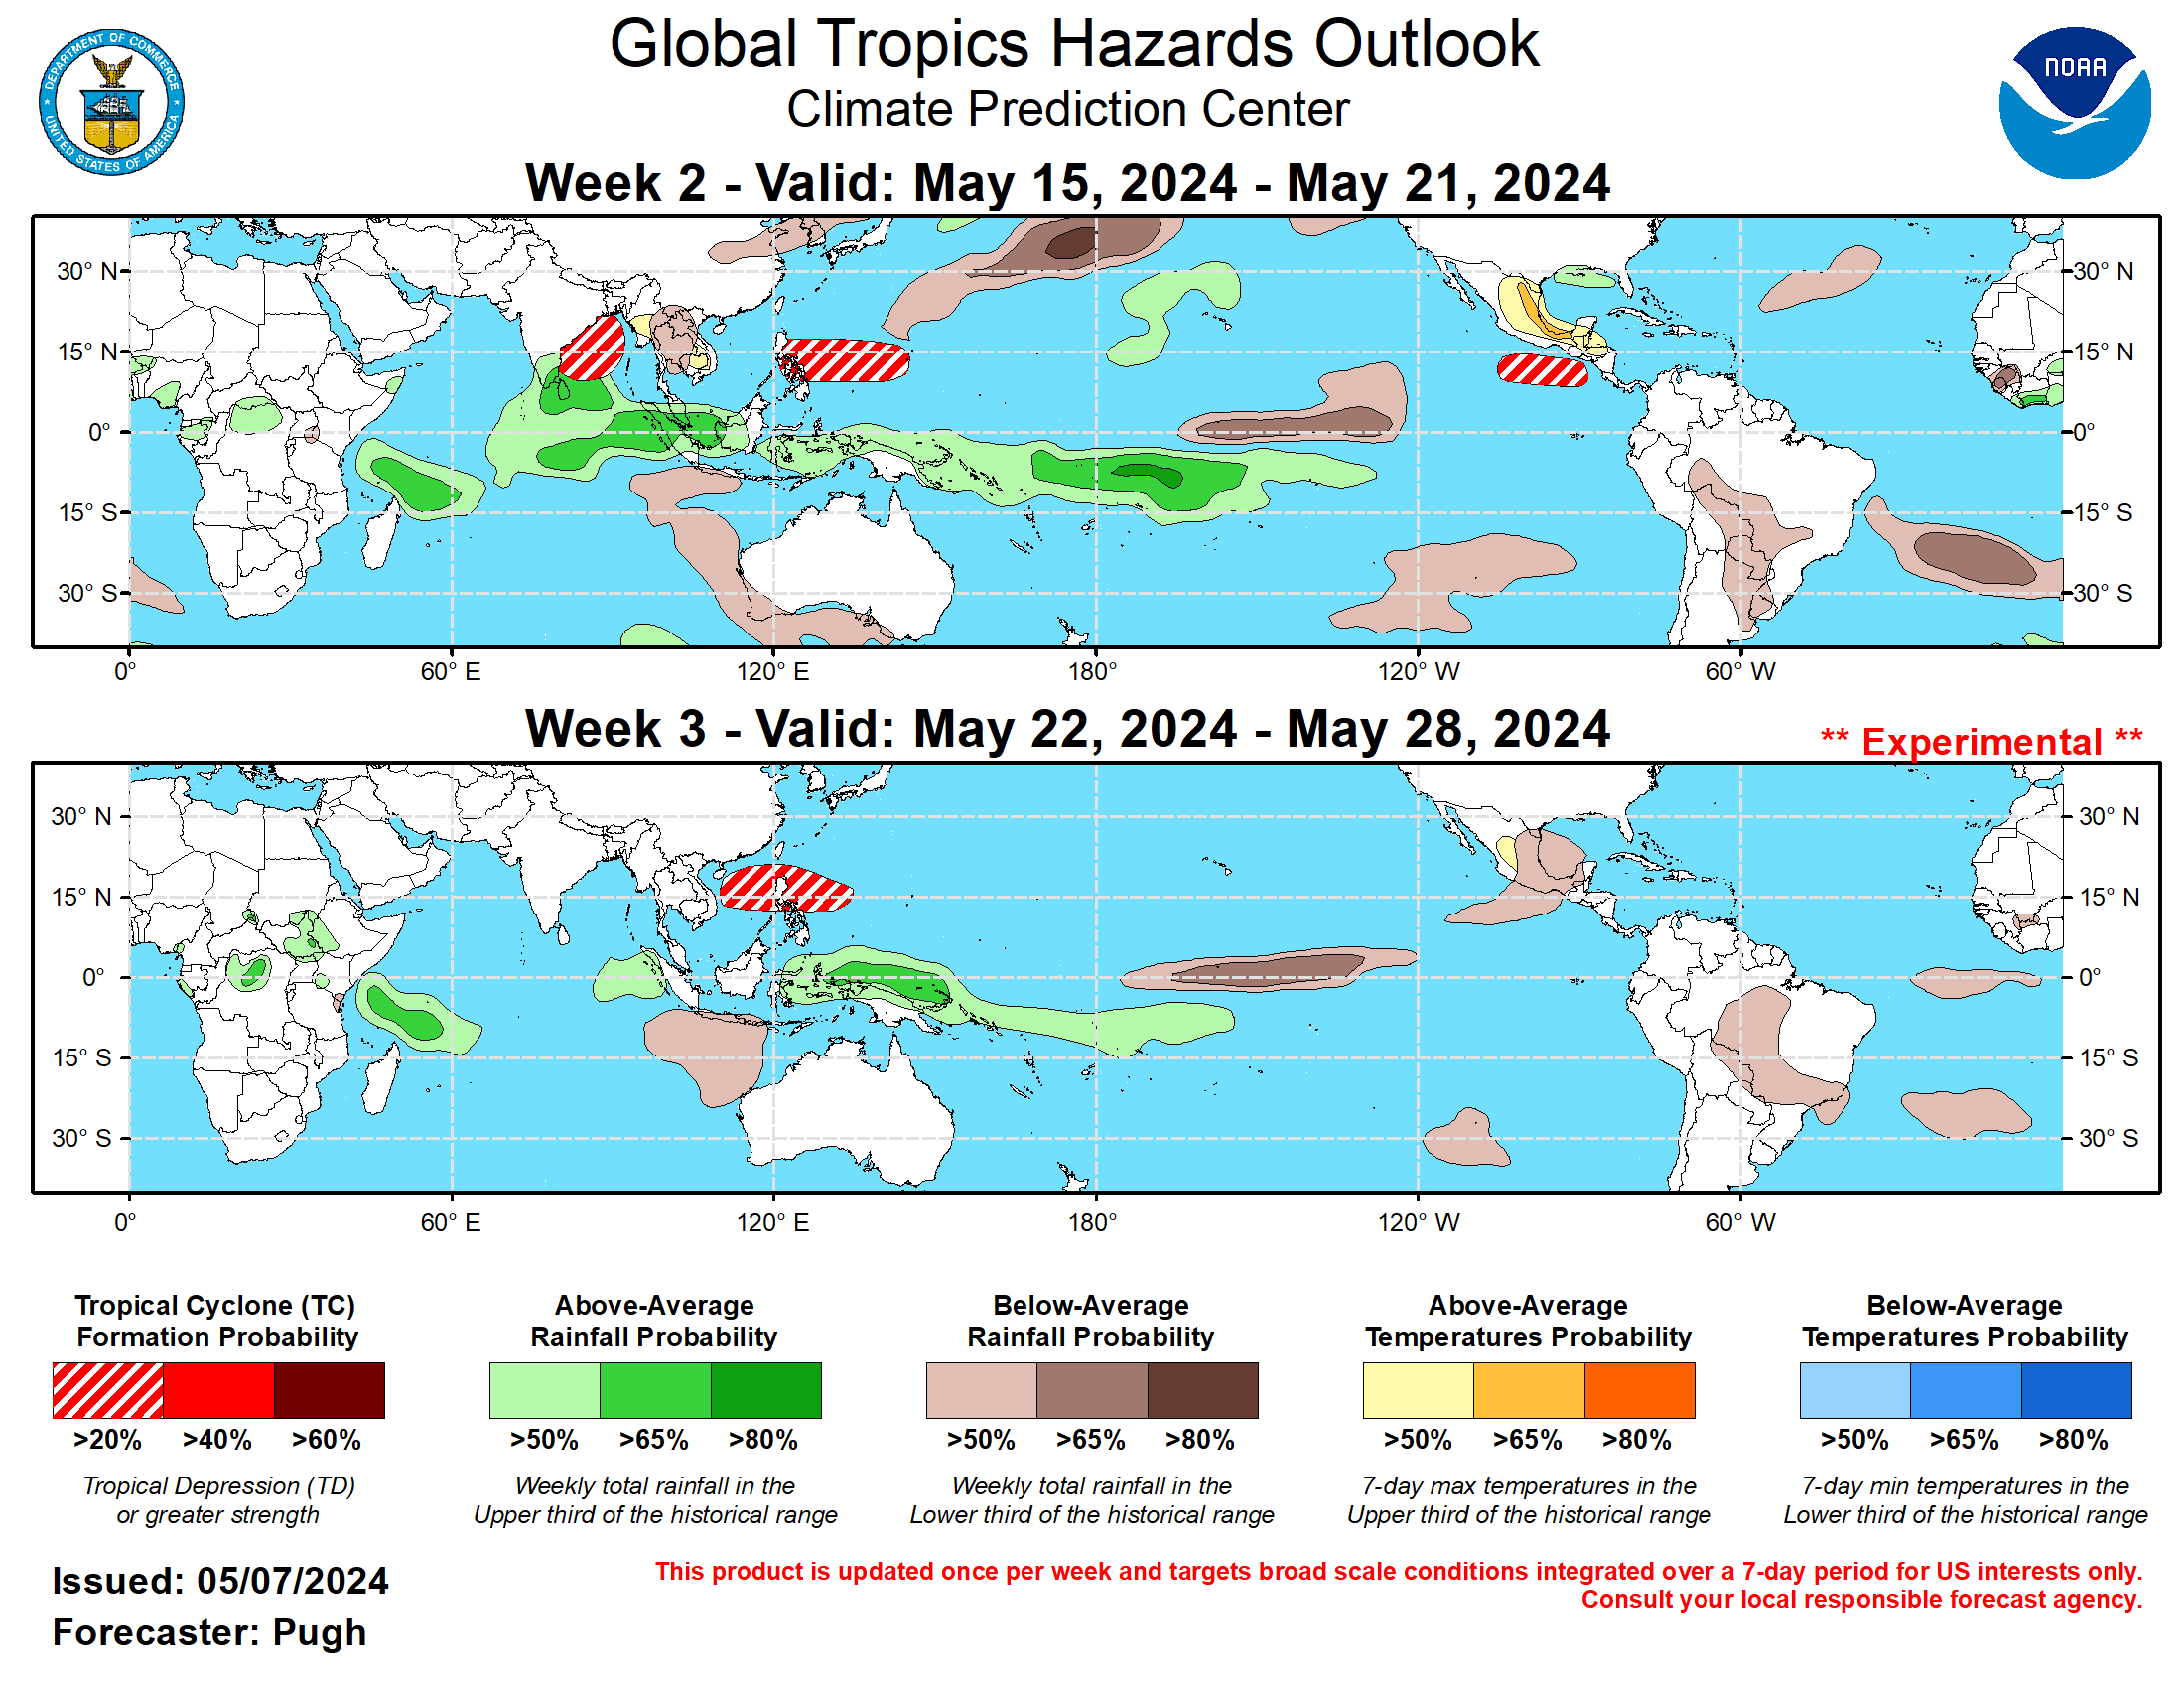 World map with Global Tropics Hazards Outlook